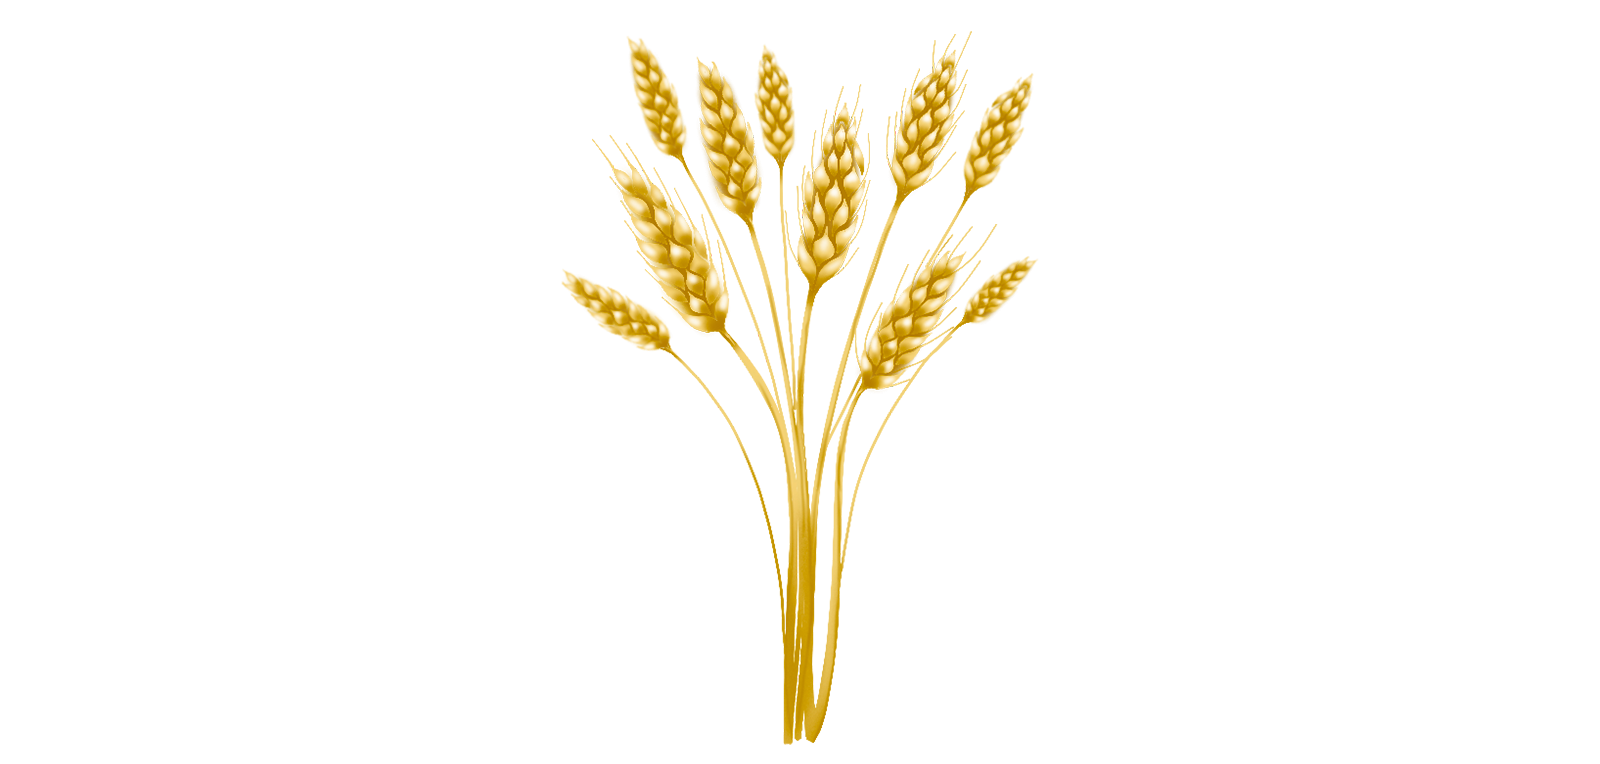 Illustration of grain